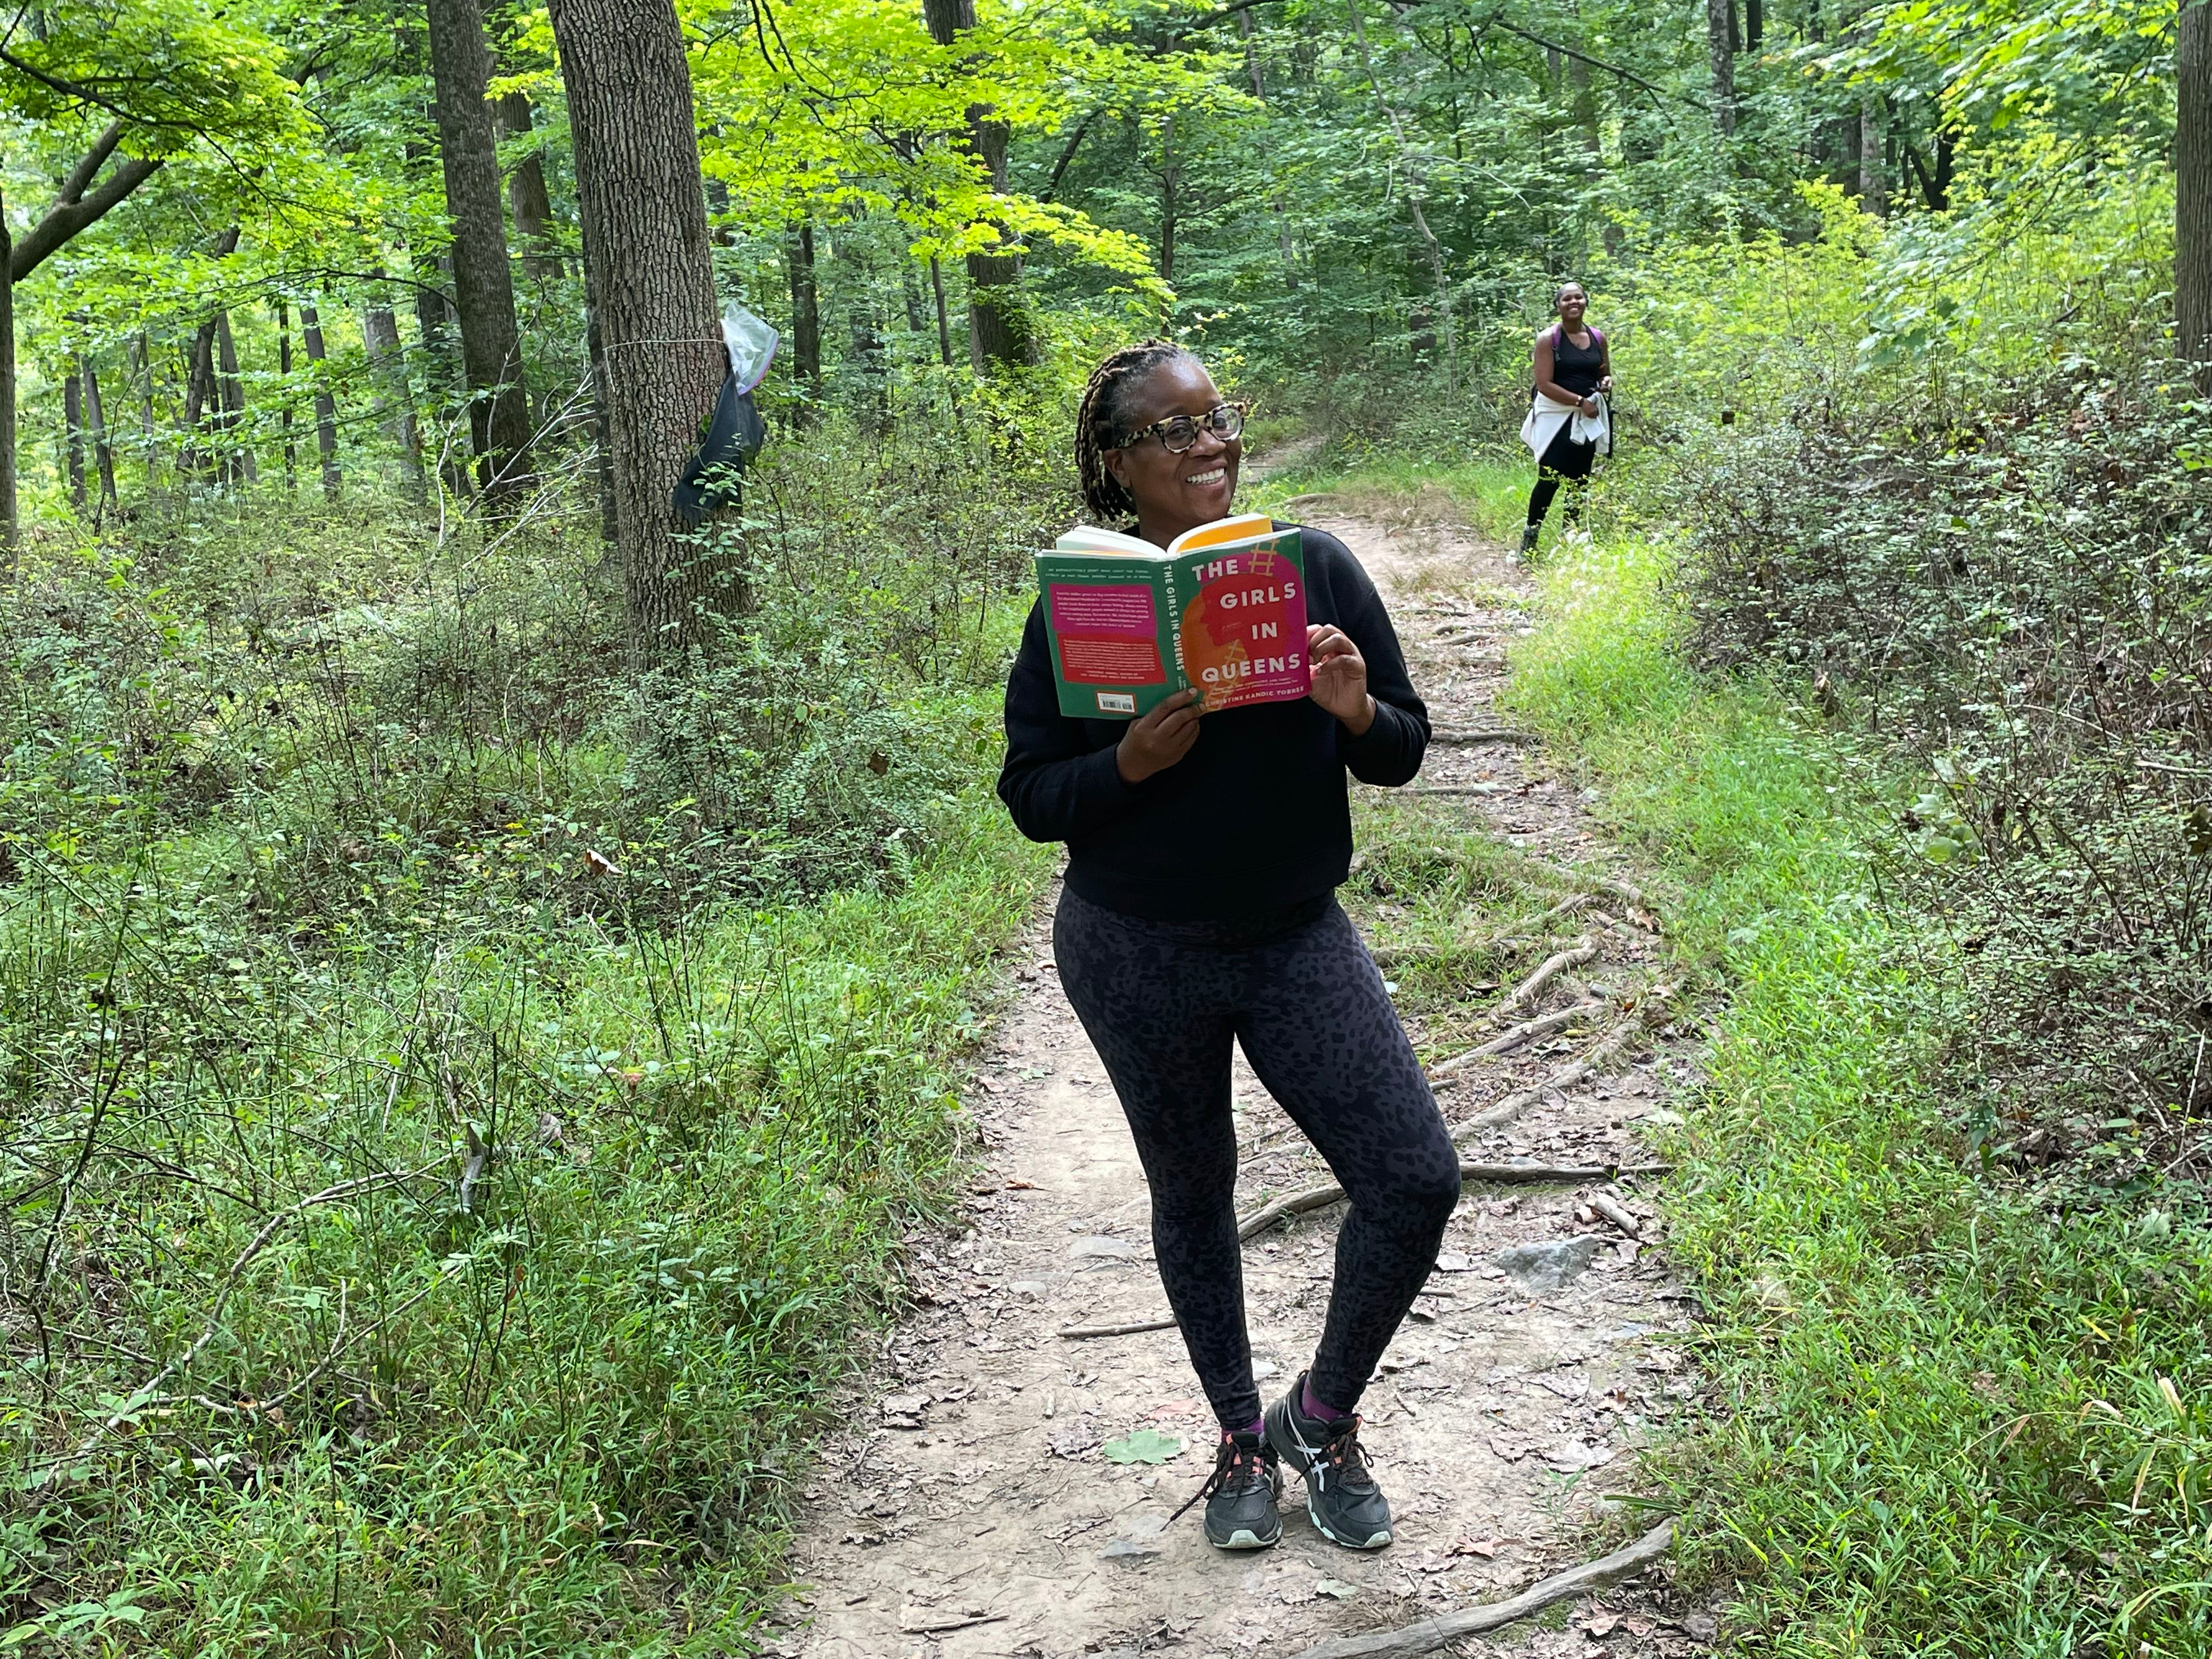 Hiking but still reading